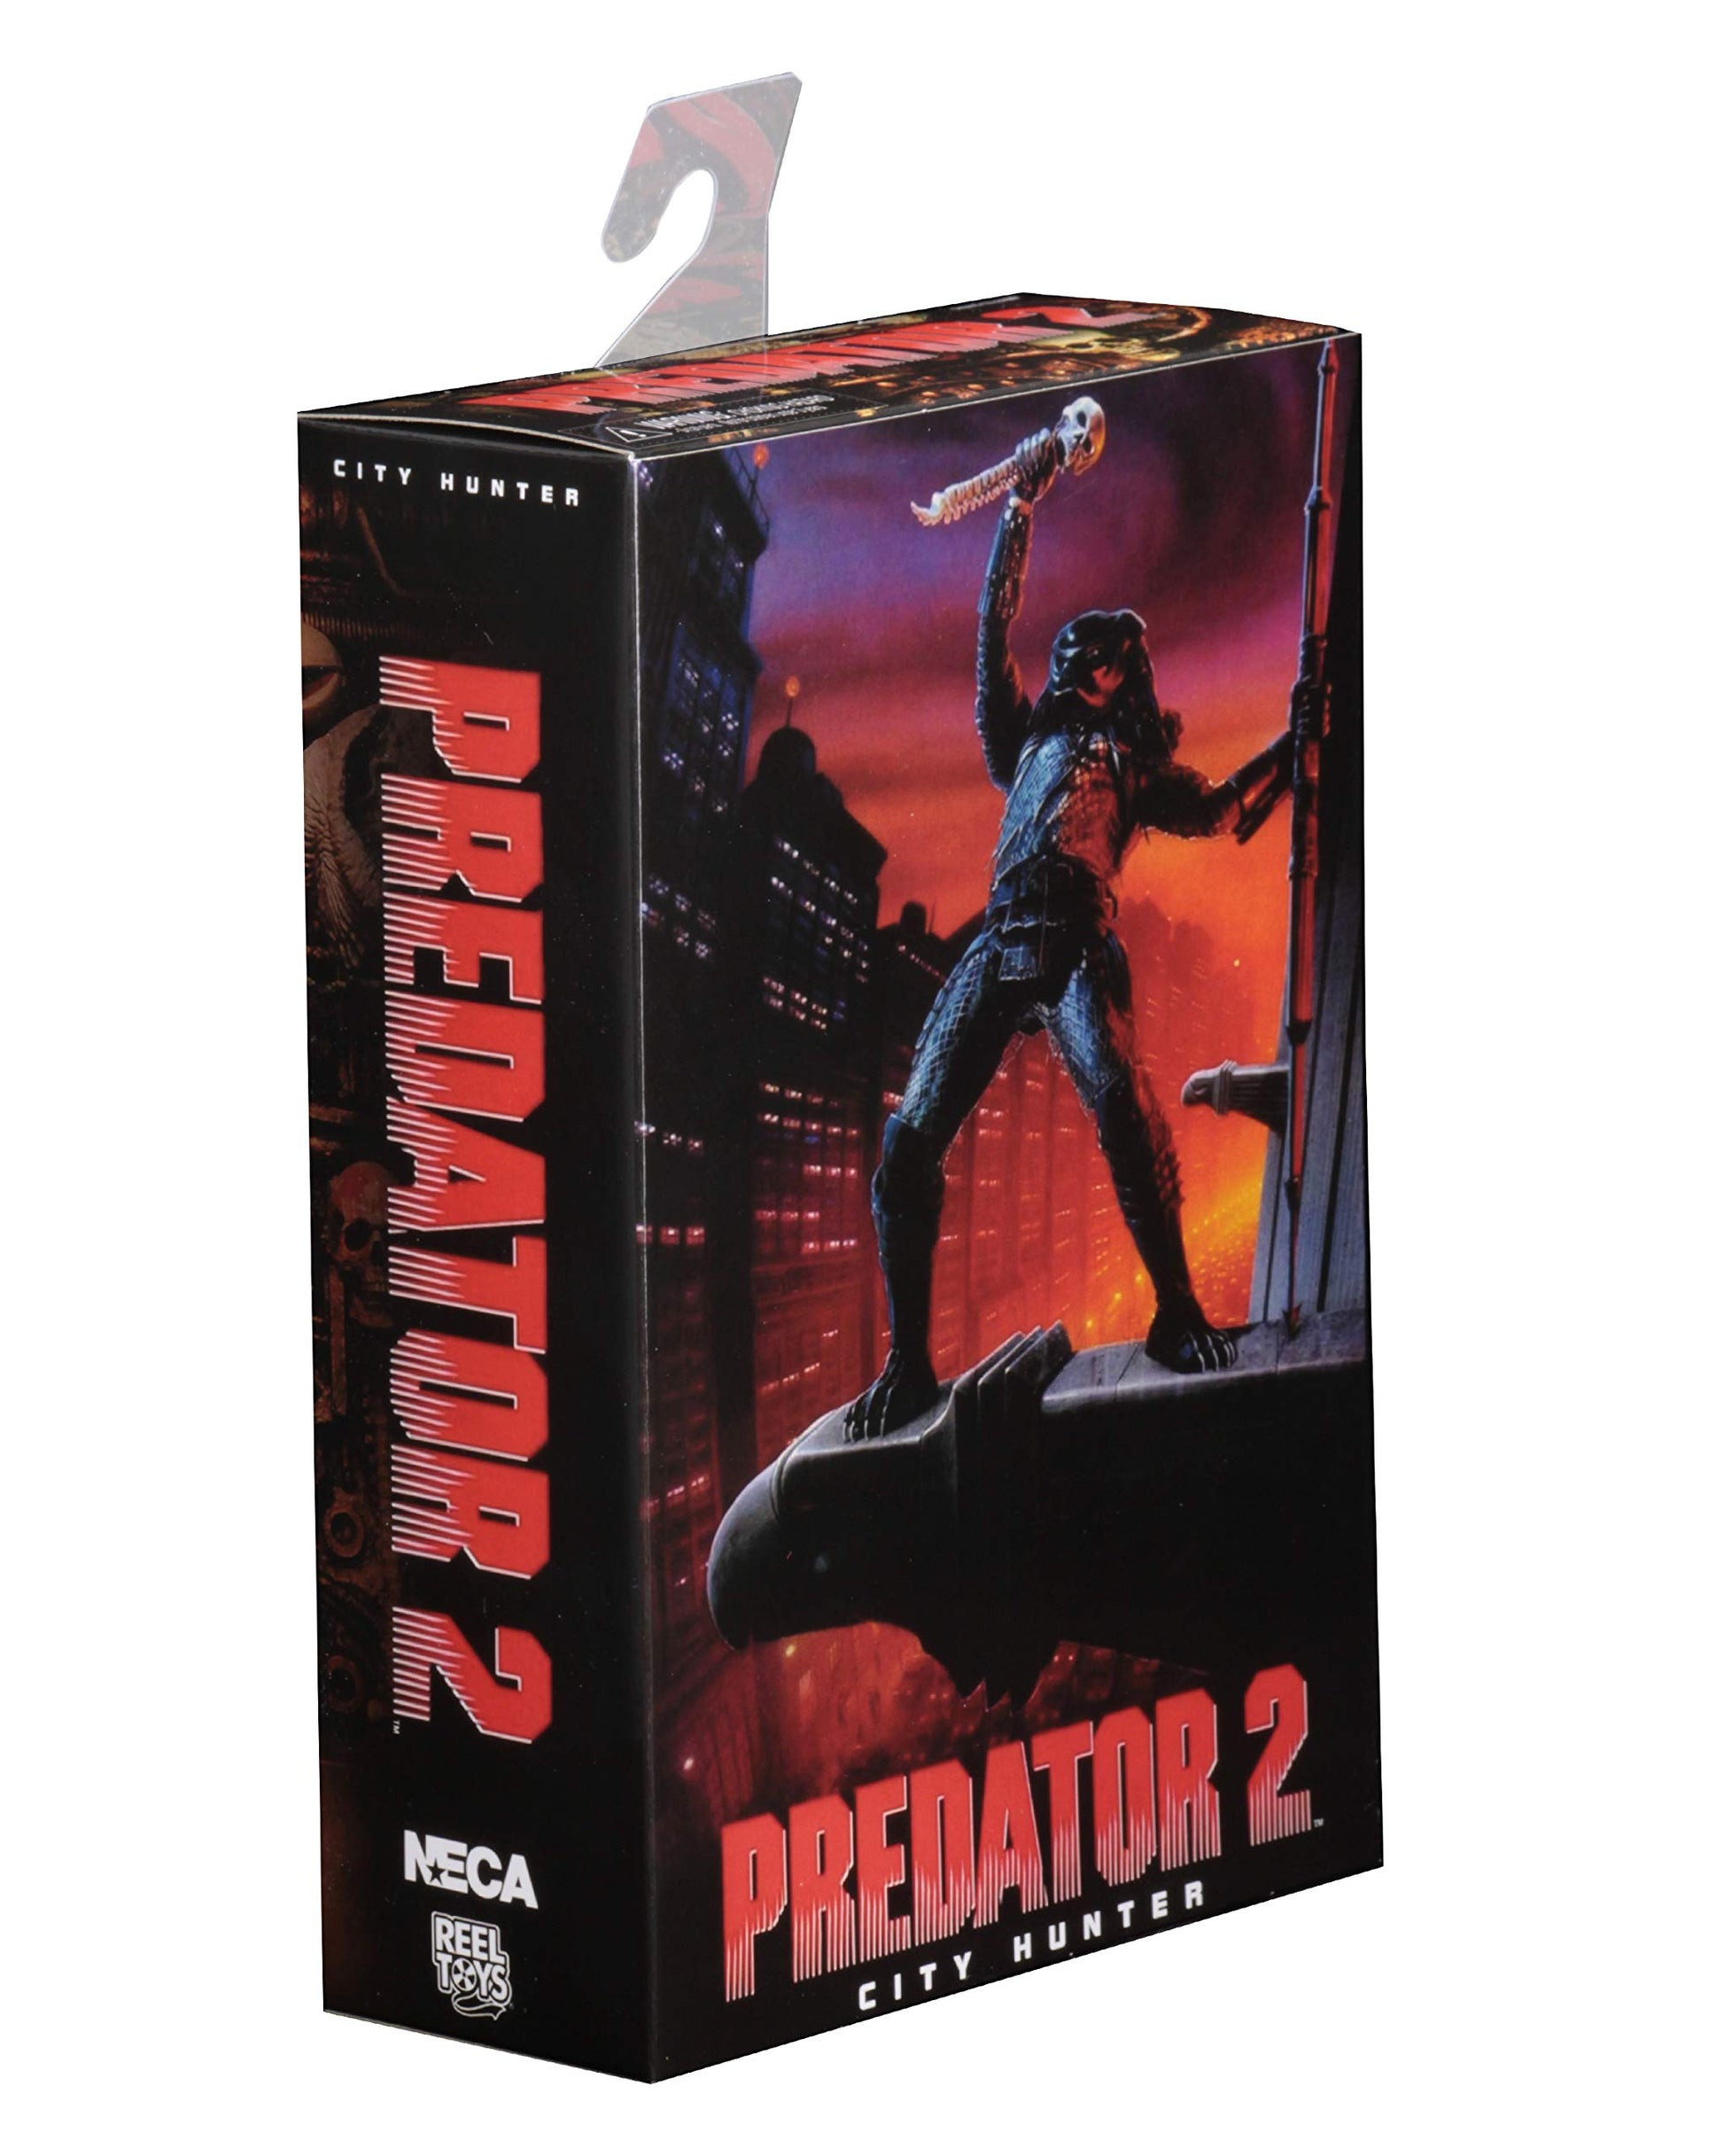 Predator 2 - Ultimate City Hunter - Zippigames